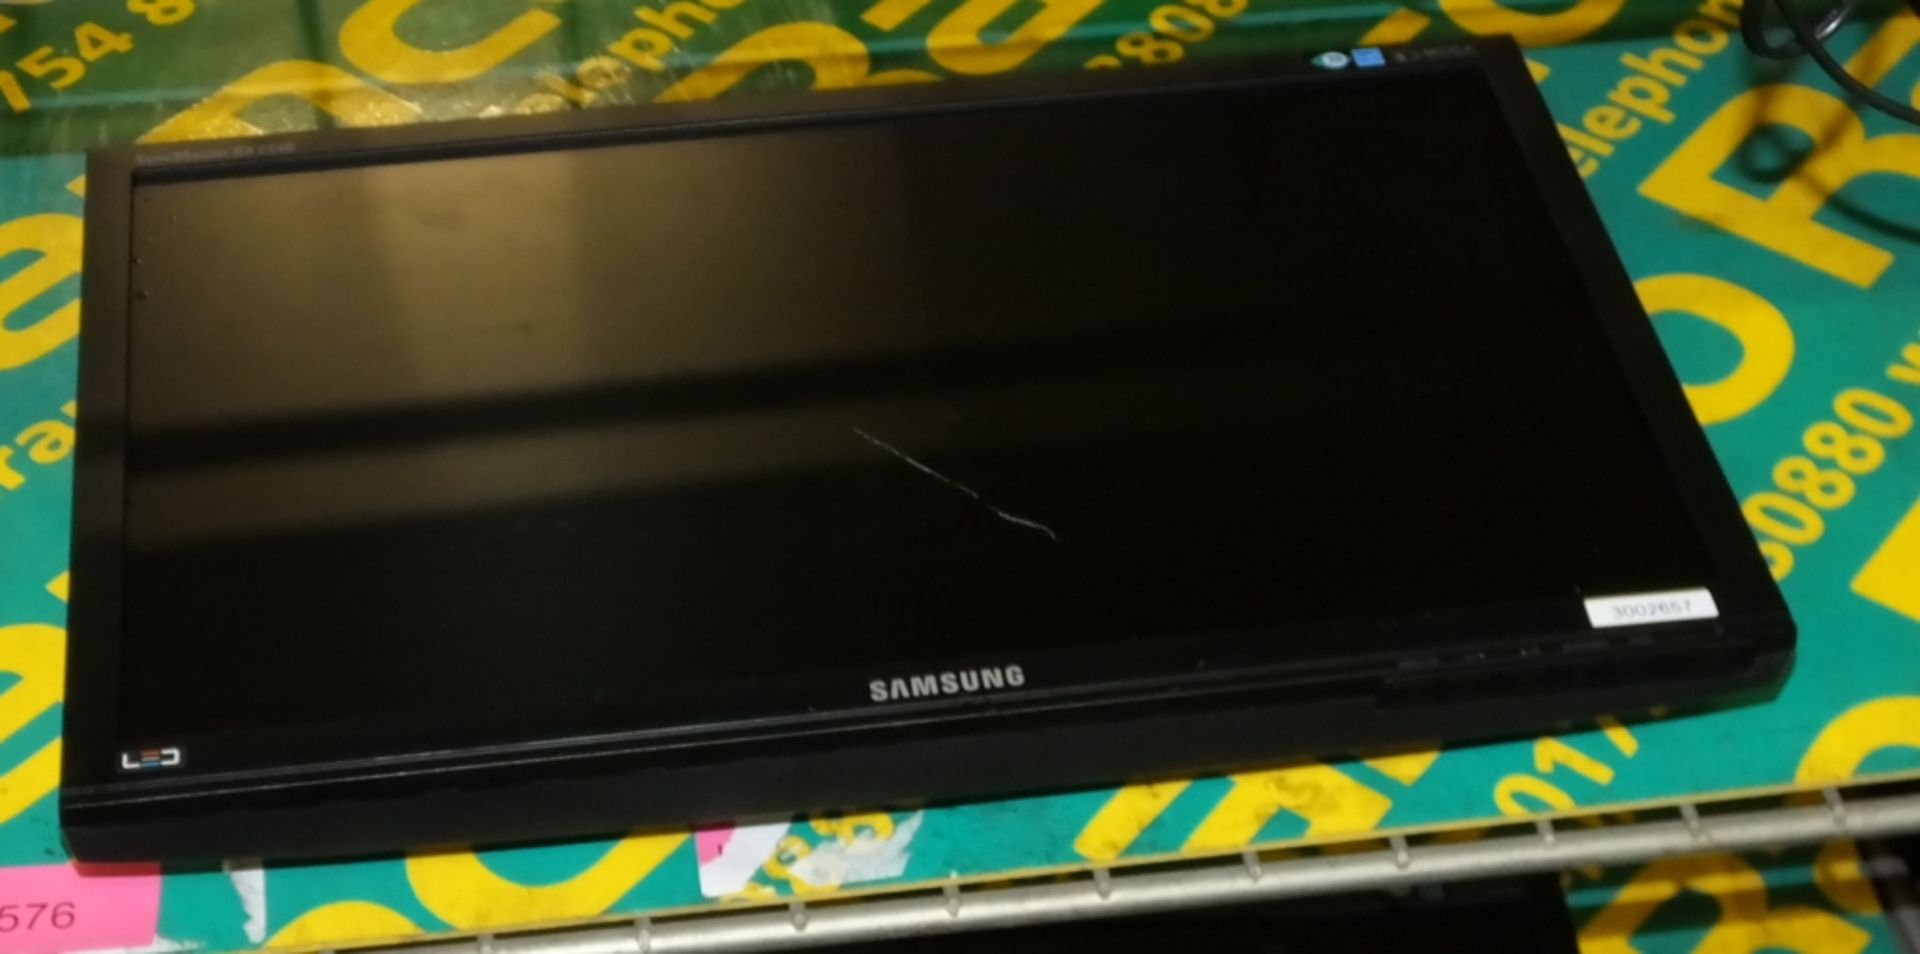 Samsung BX2340 Monitor serial CB22H9XB503469Z (scratch) - no stand